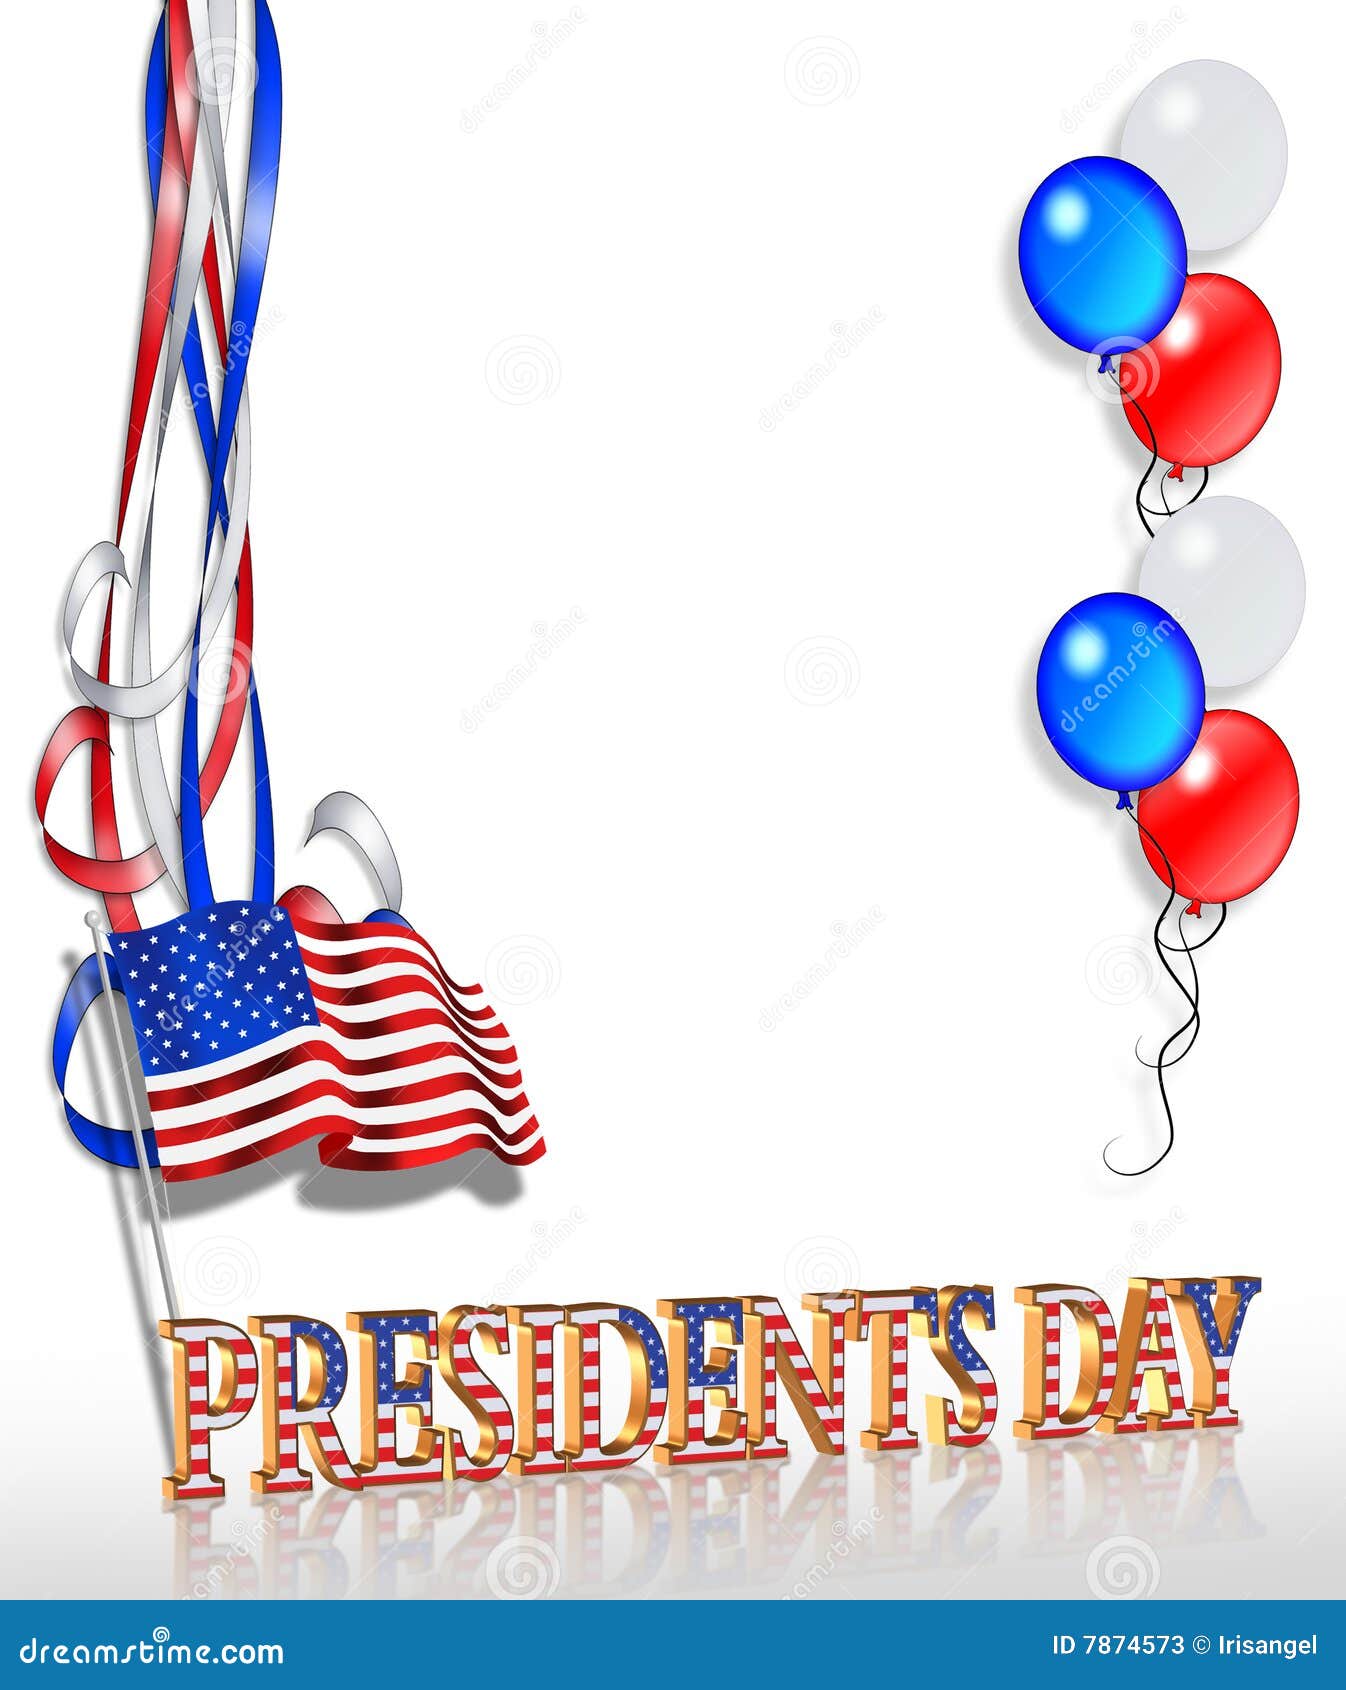 Presidents Day Background 2 Stock Photos - Image: 78745731183 x 1300